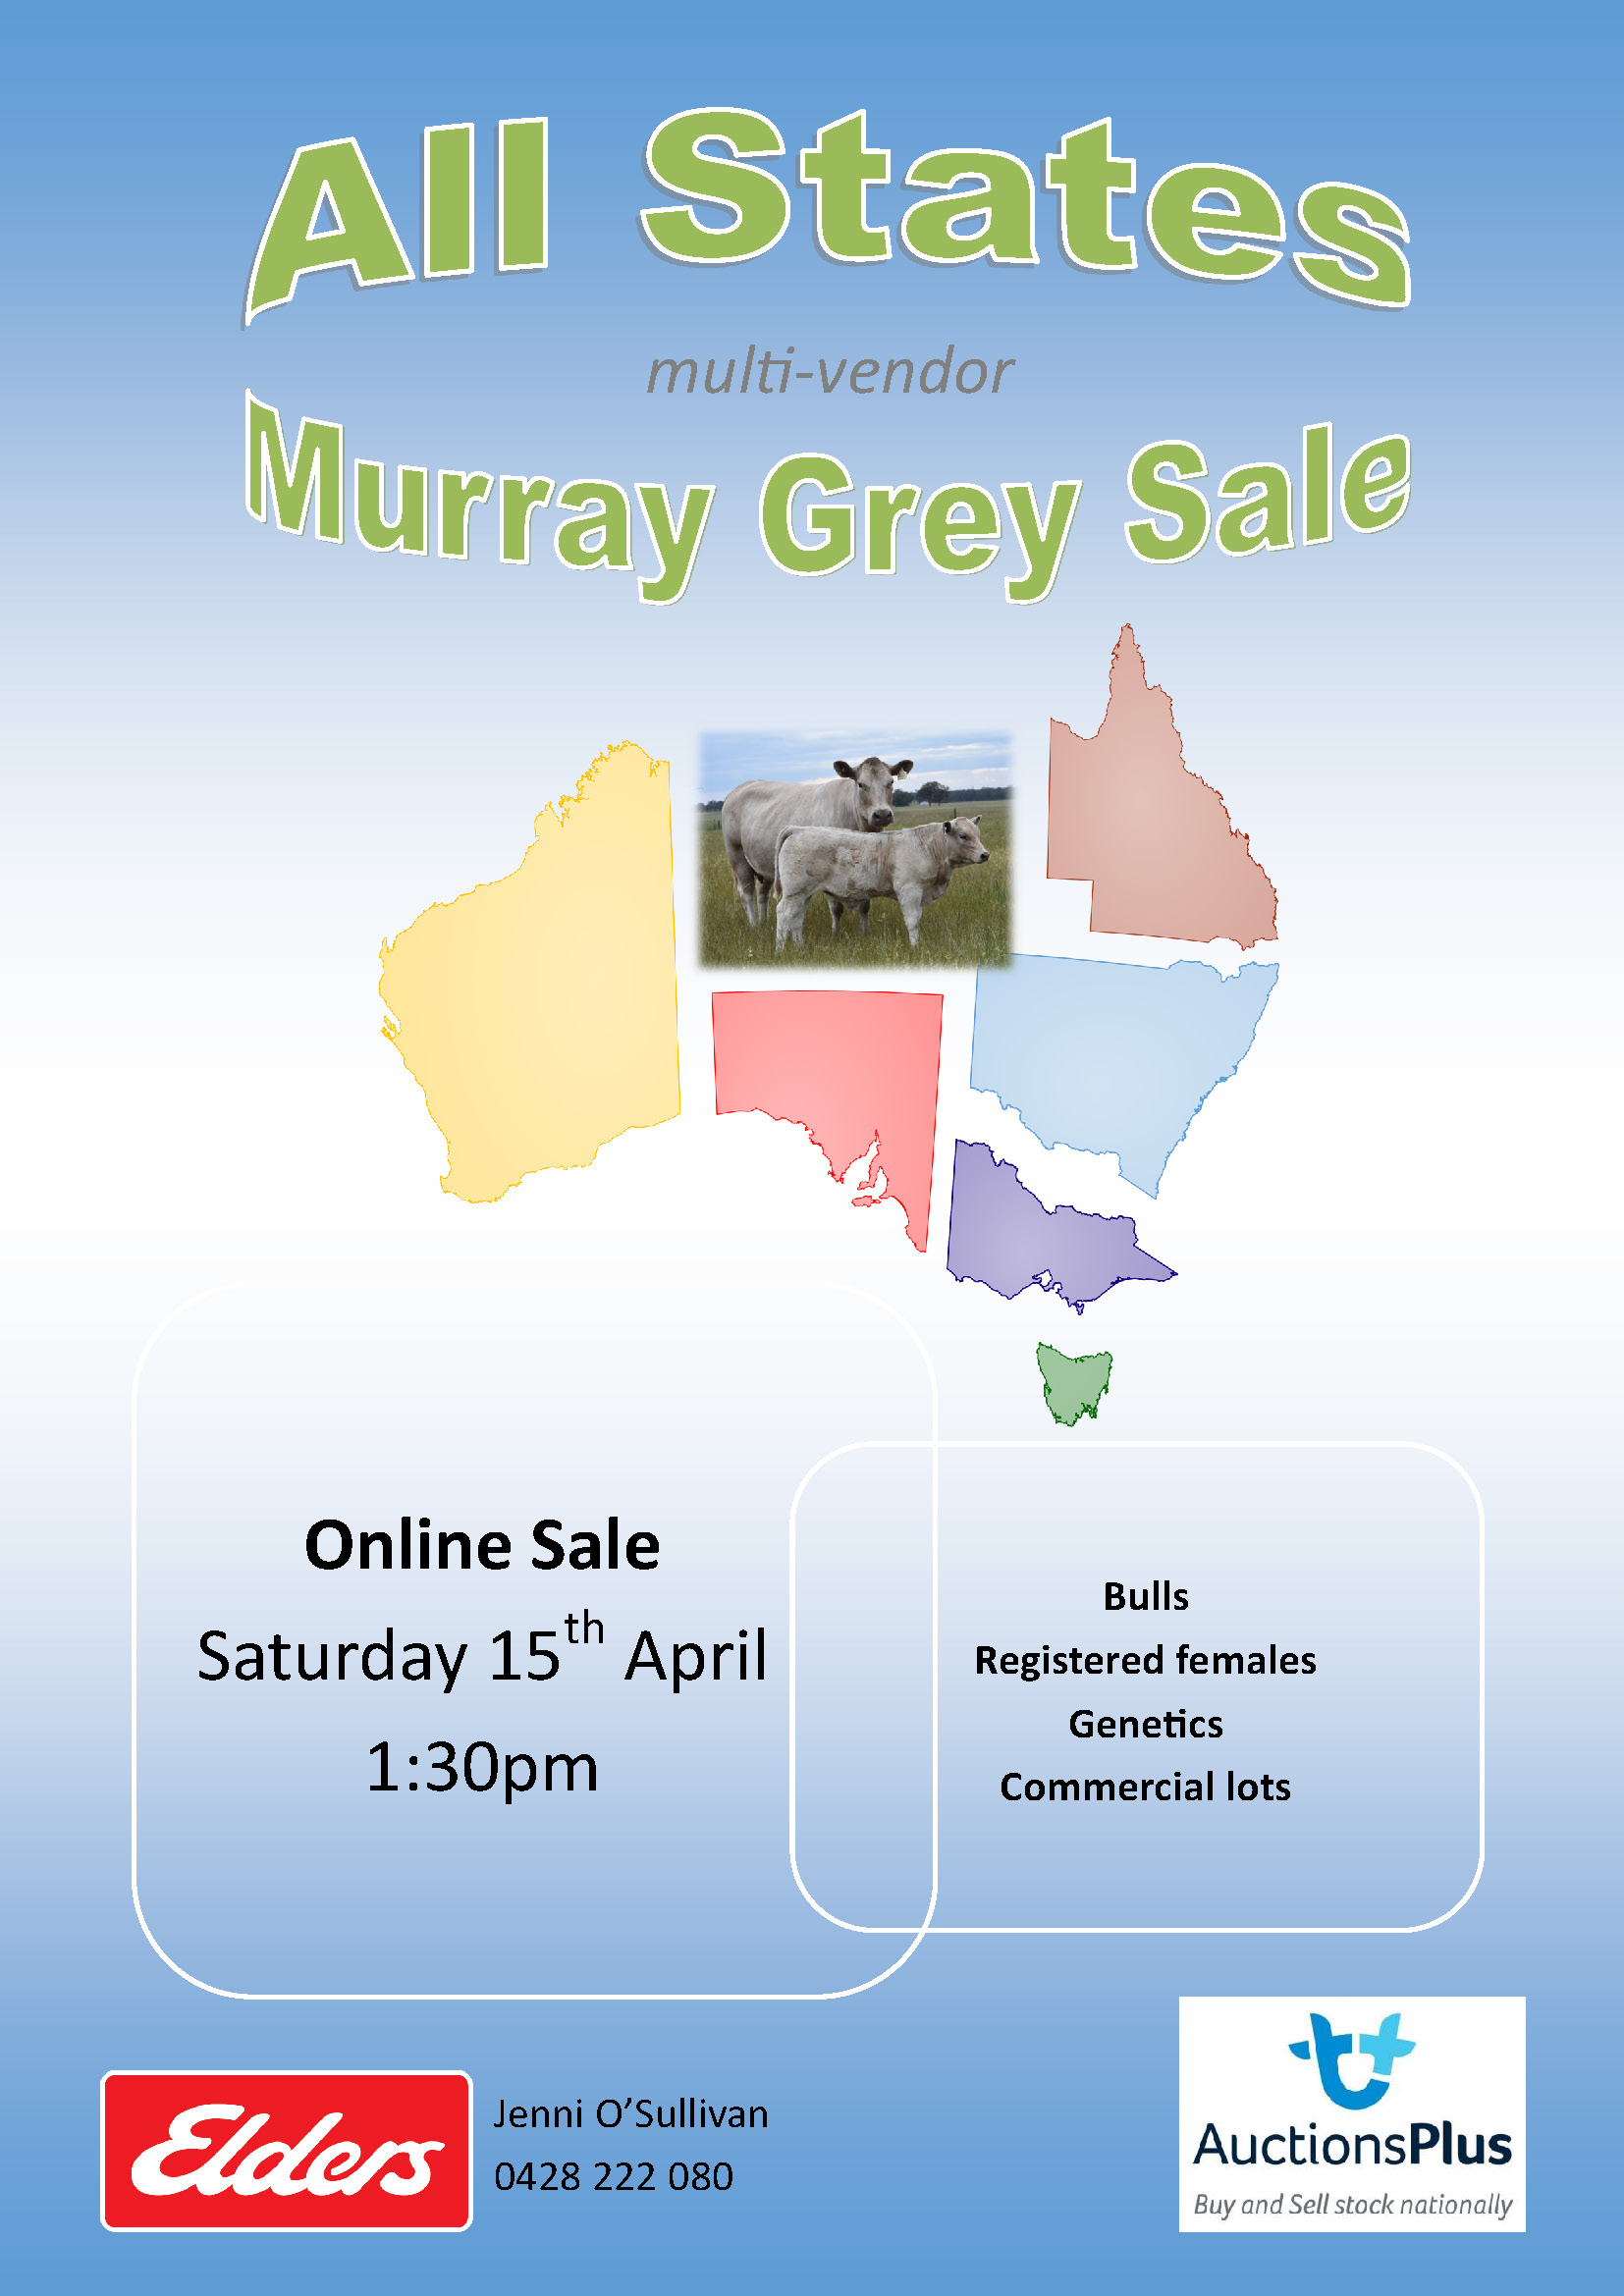 All States, Multi-Vendor, Murray Grey Sale